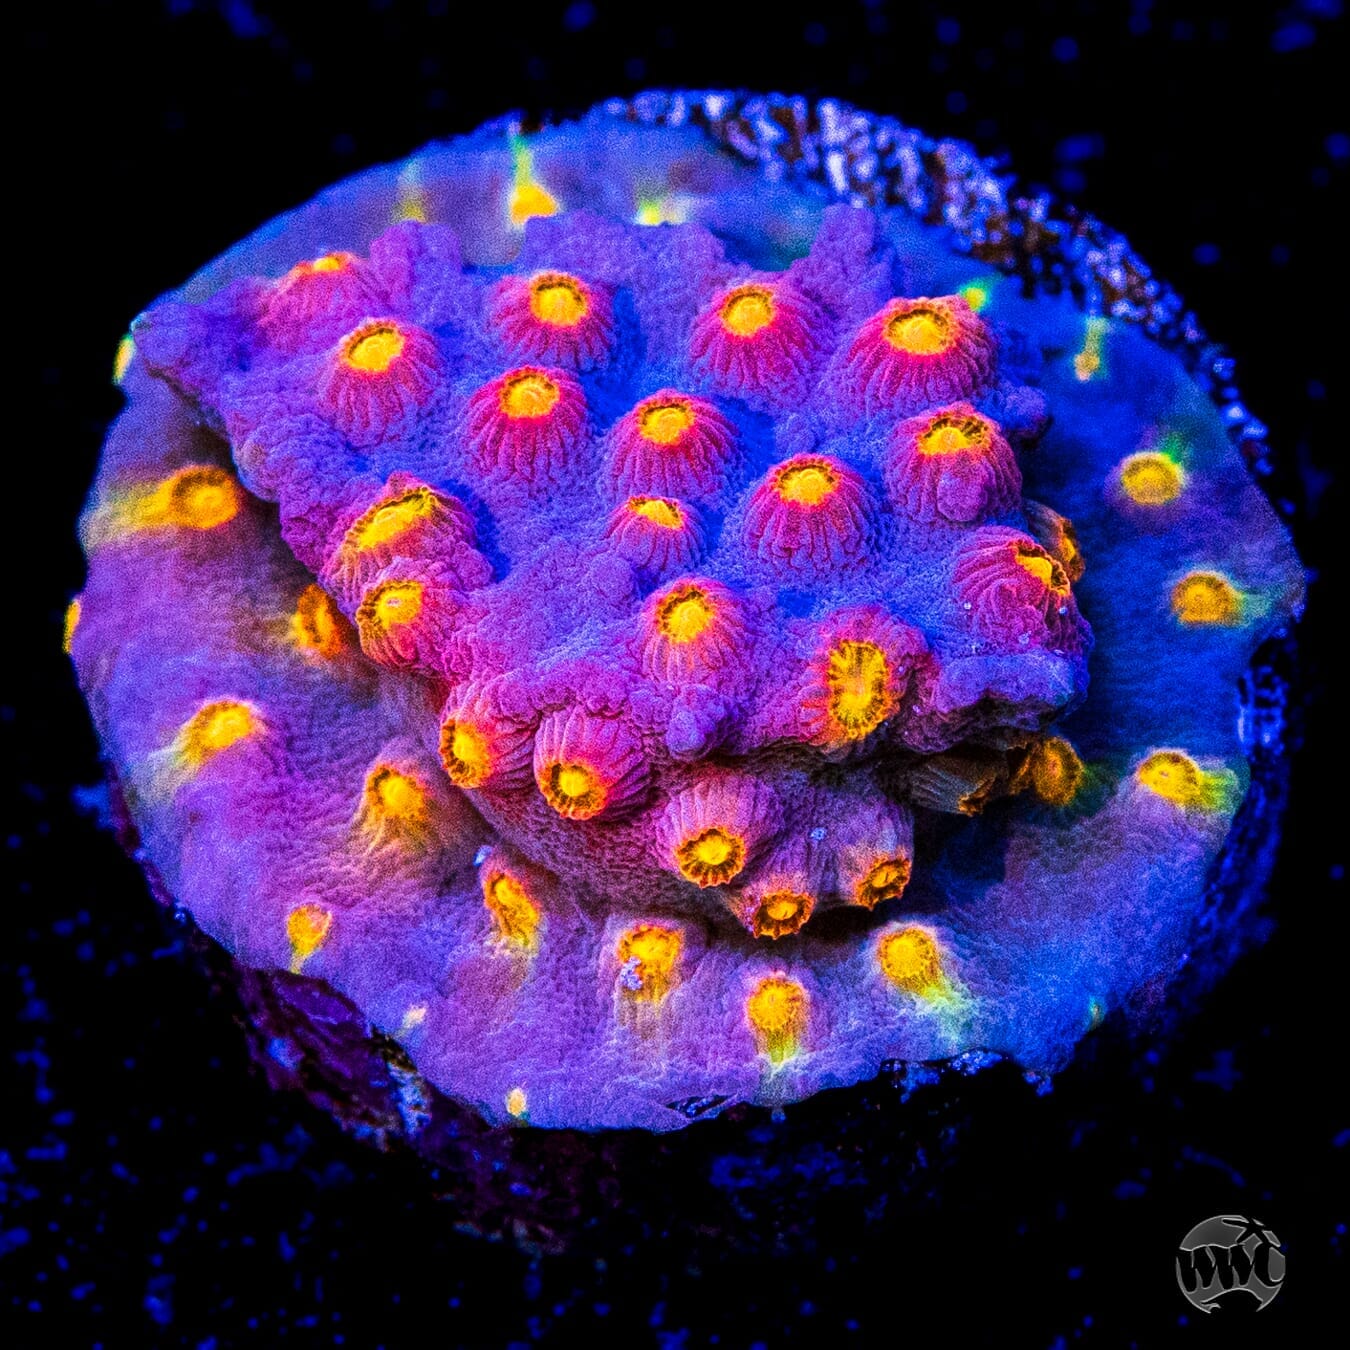 WWC Rainbow Madness Cyphastrea Coral